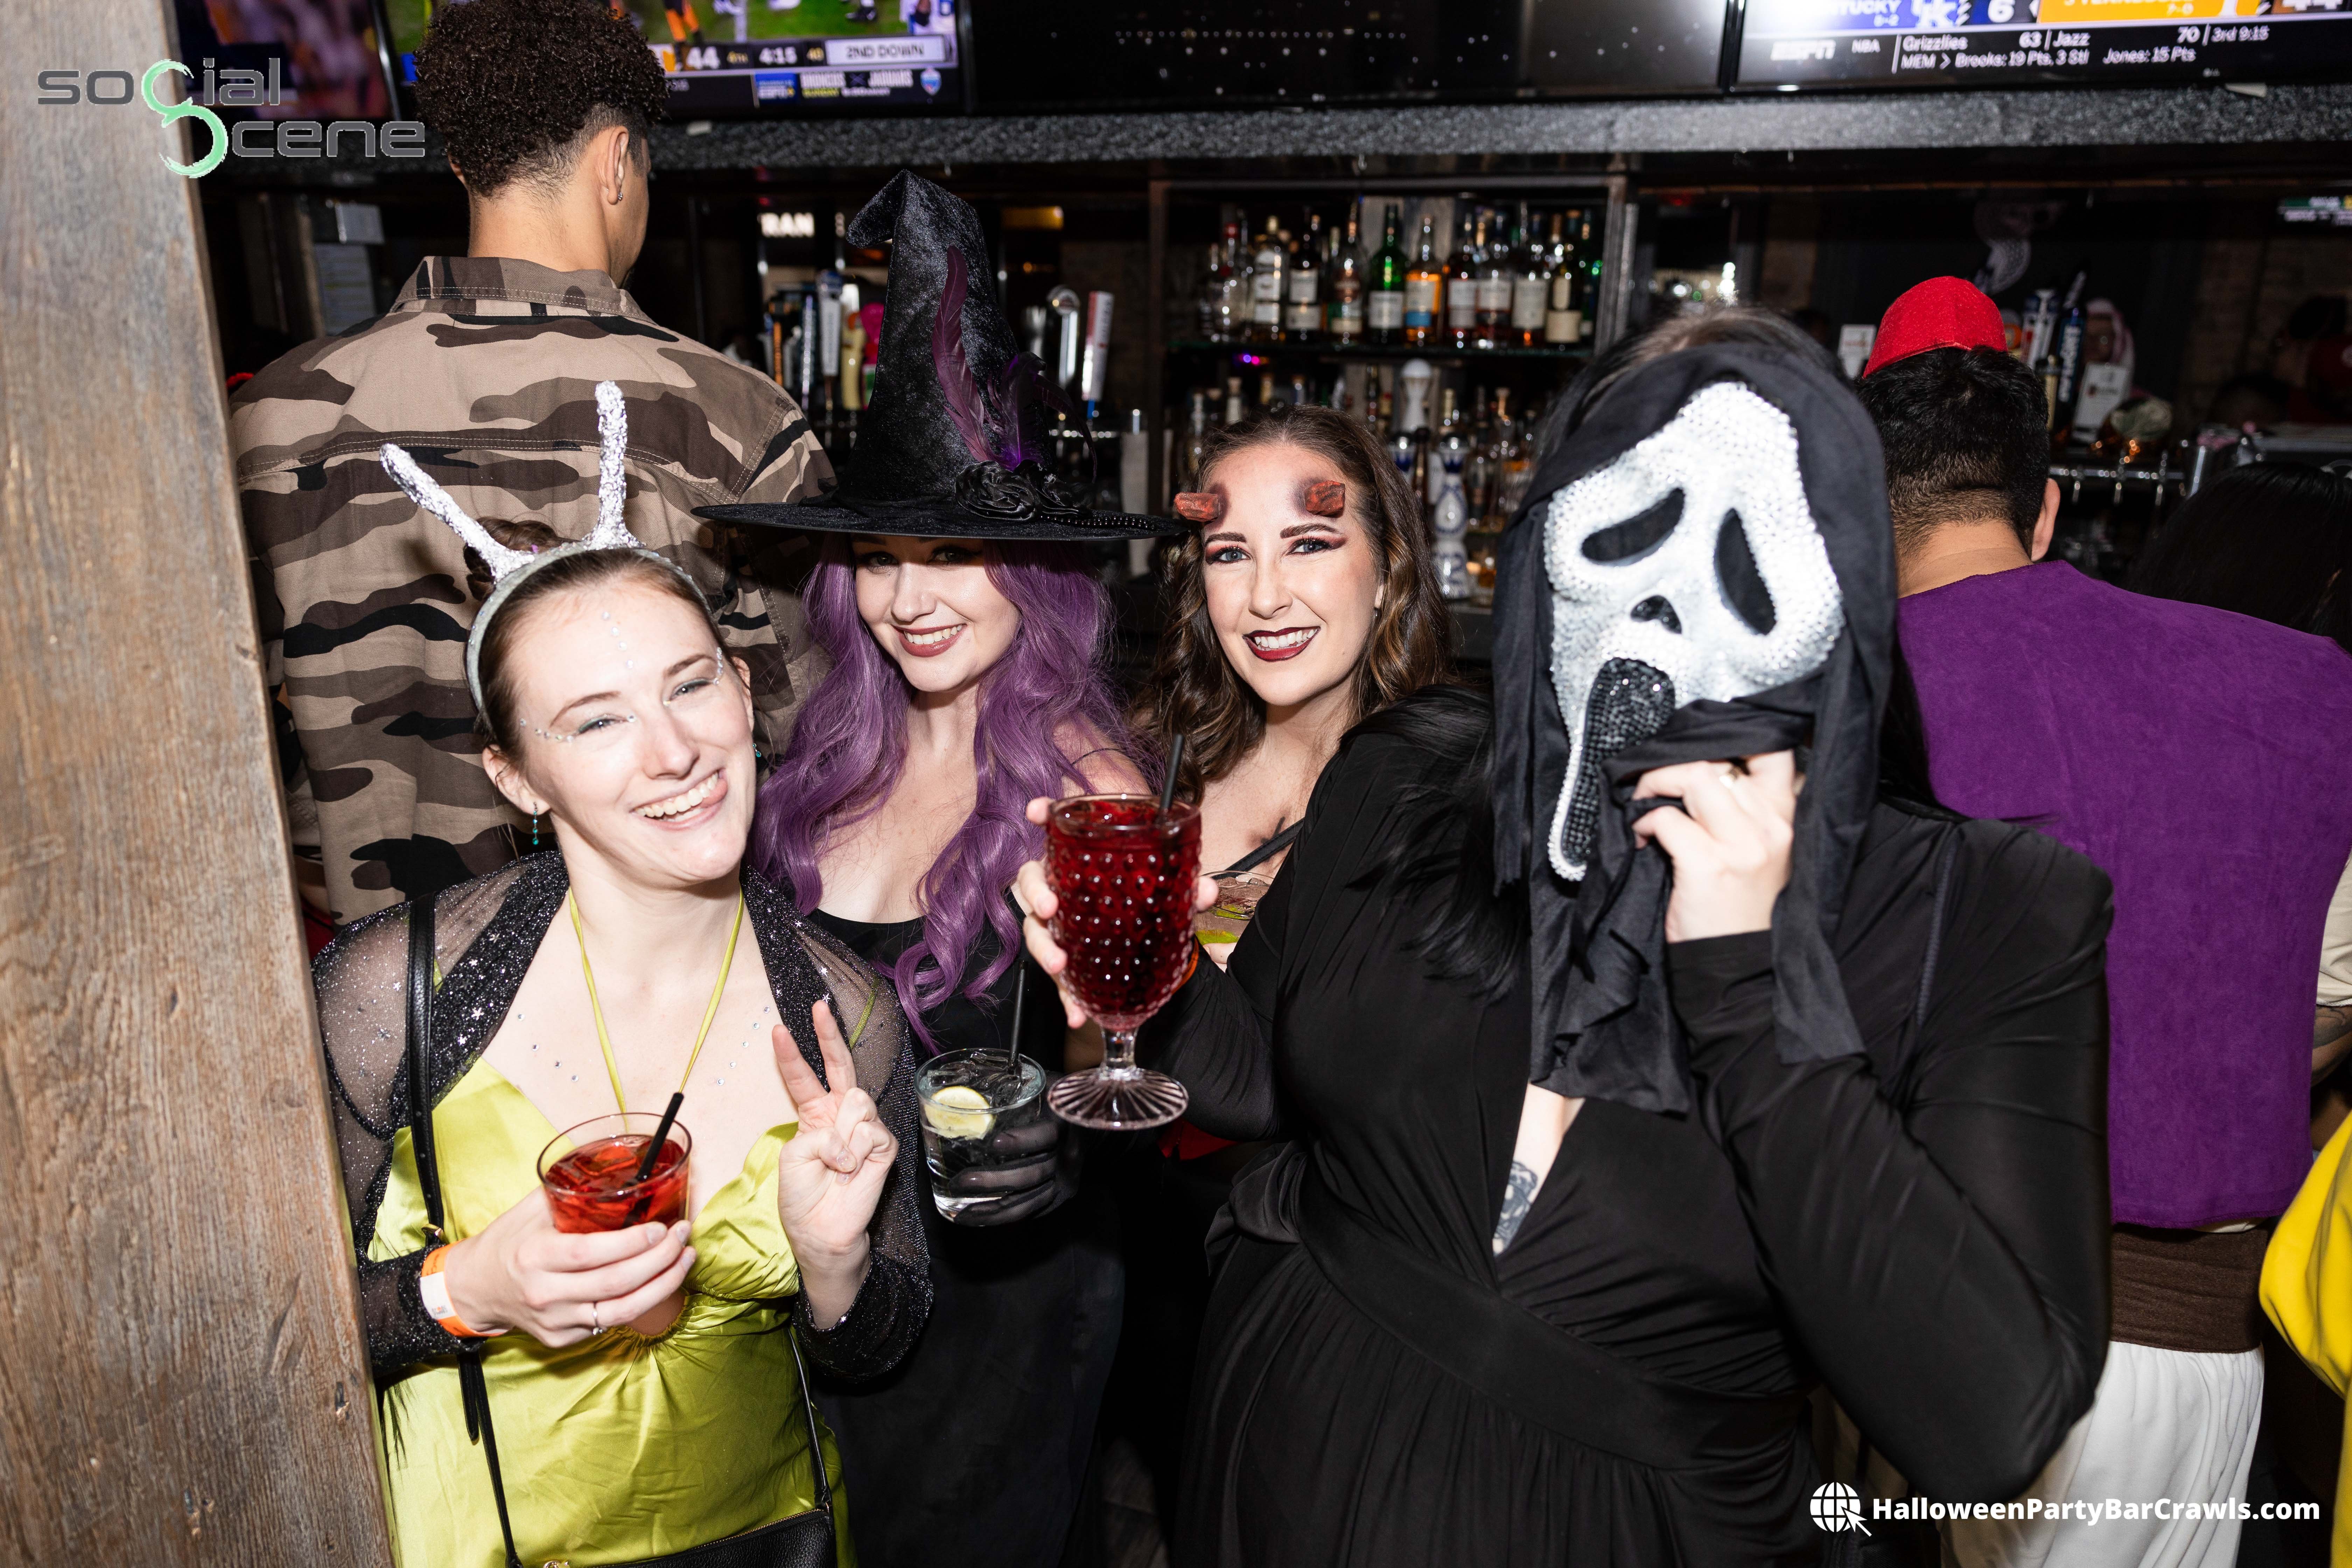 Halloween-Bar-Crawl-Halloweenpartybarcrawls-DIY-costume-ideas-groups-horror